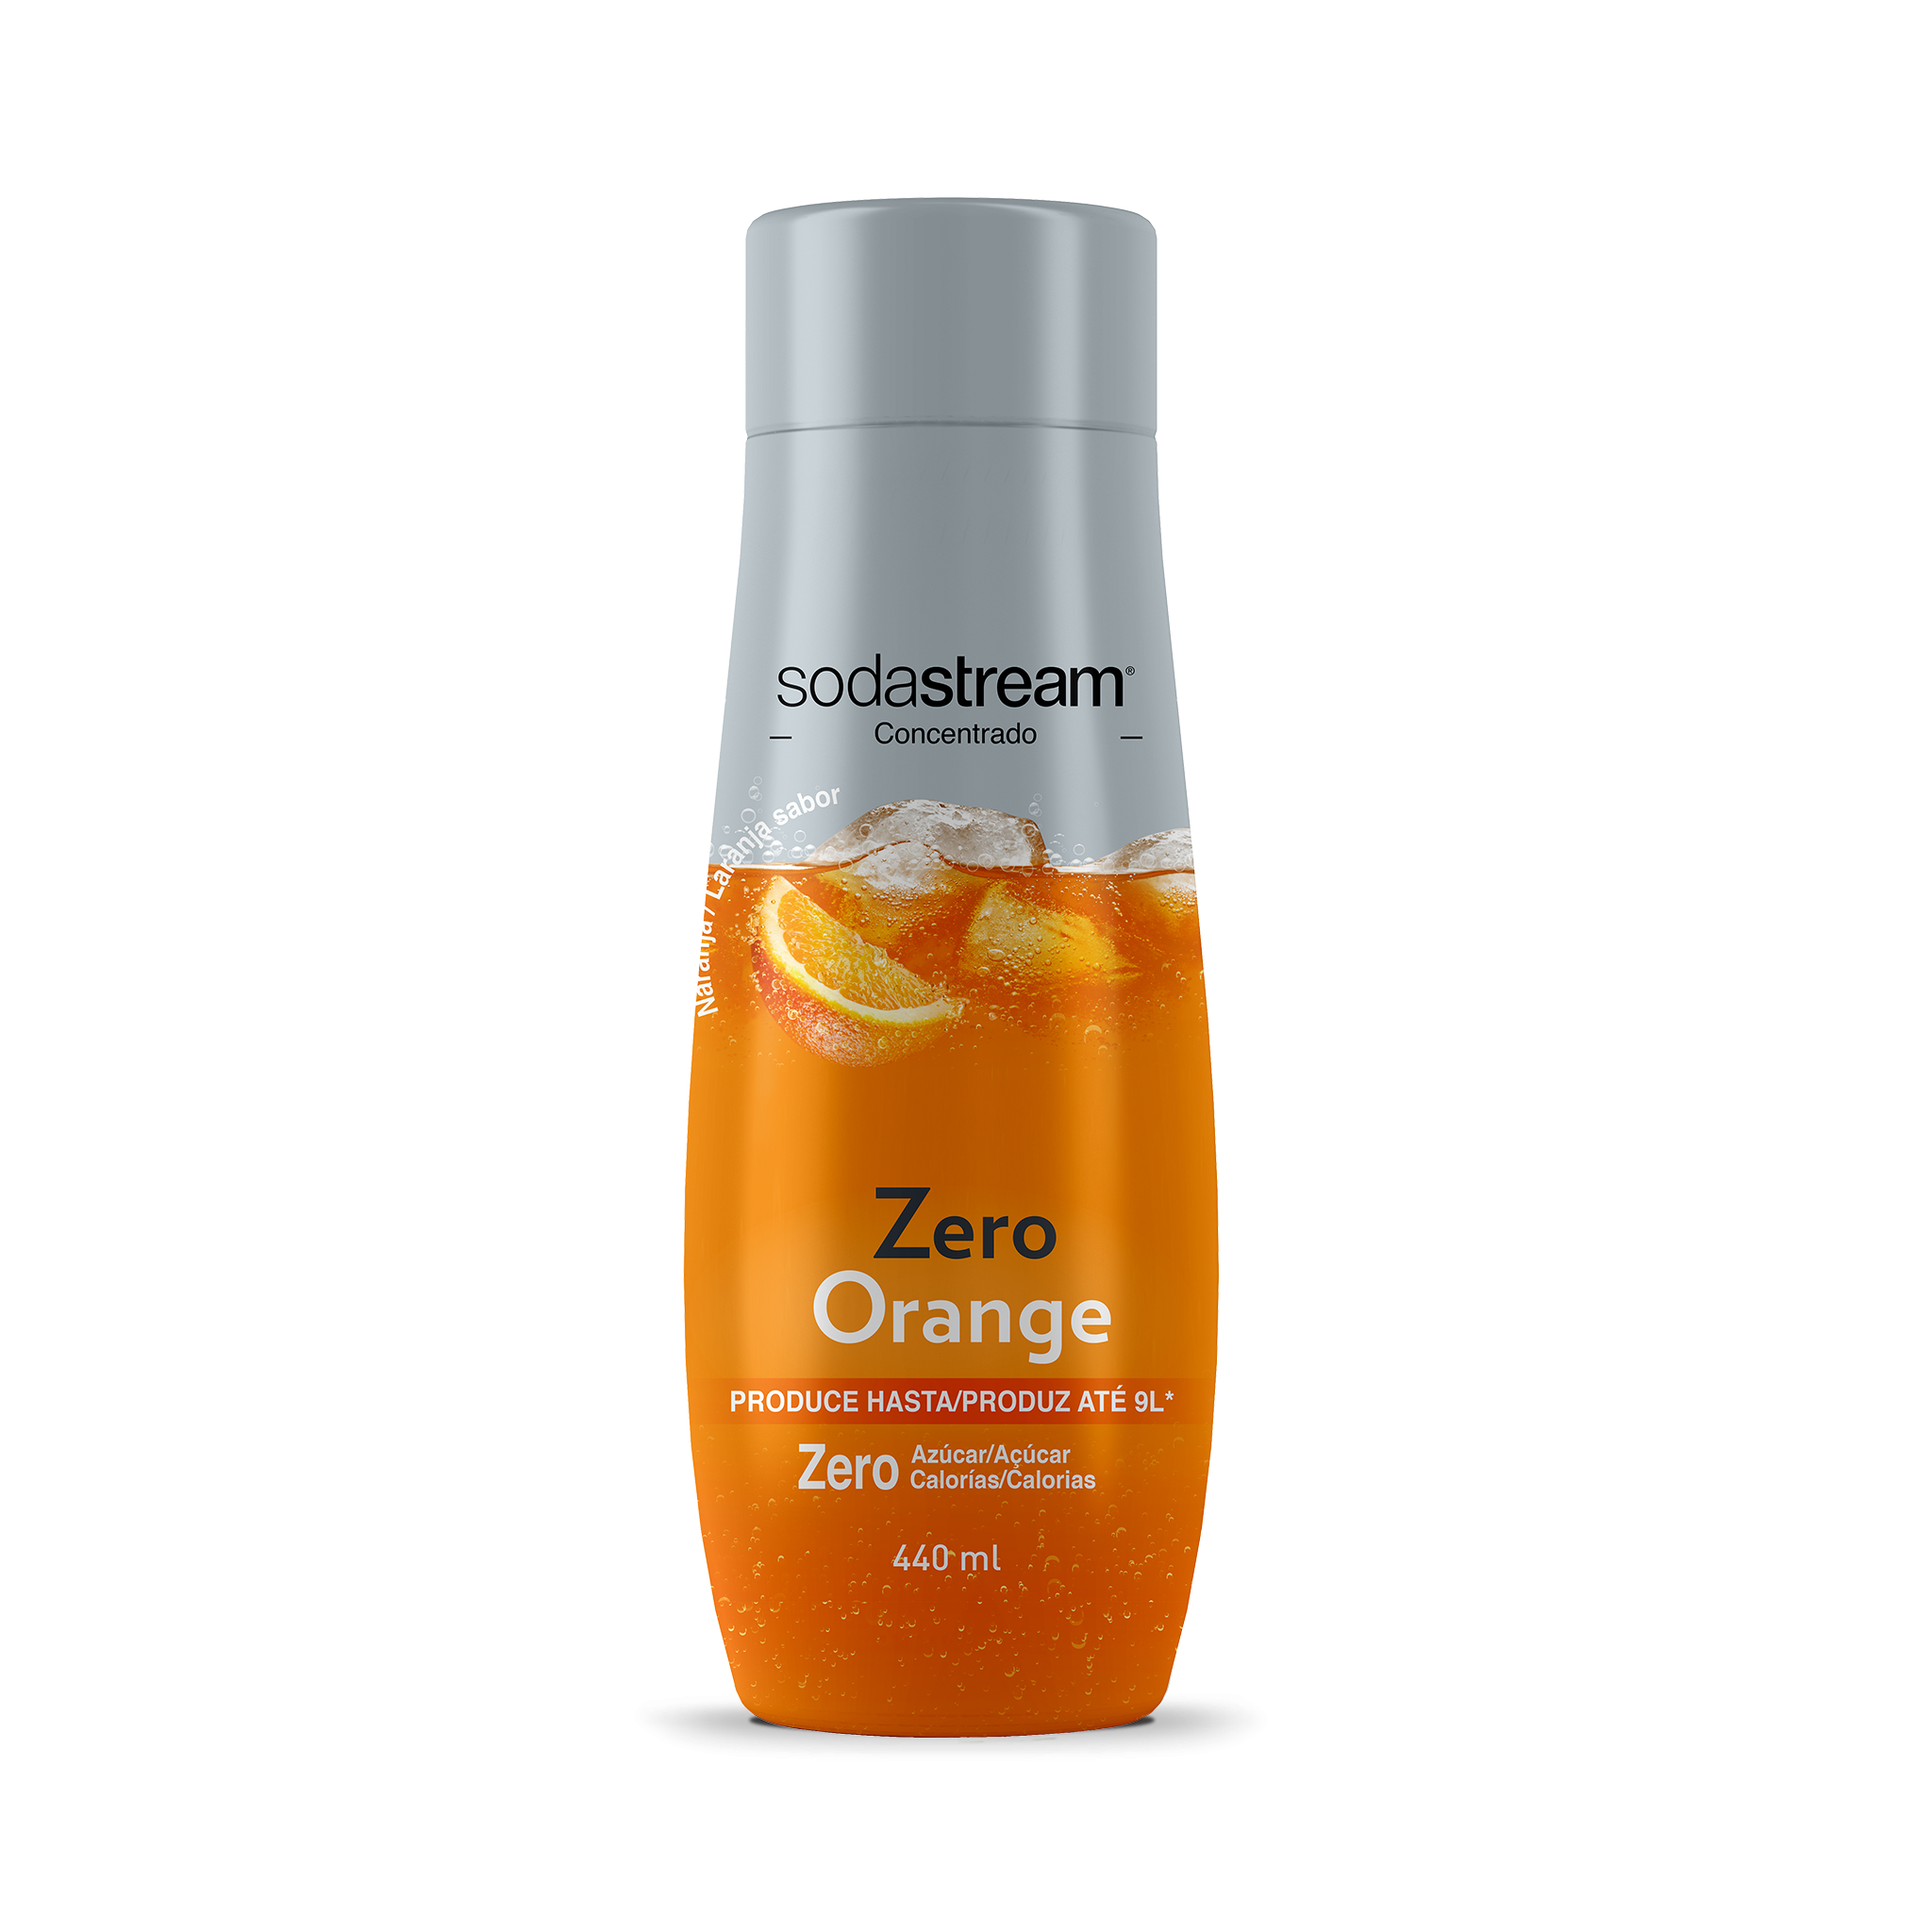 Orange Zero sodastream